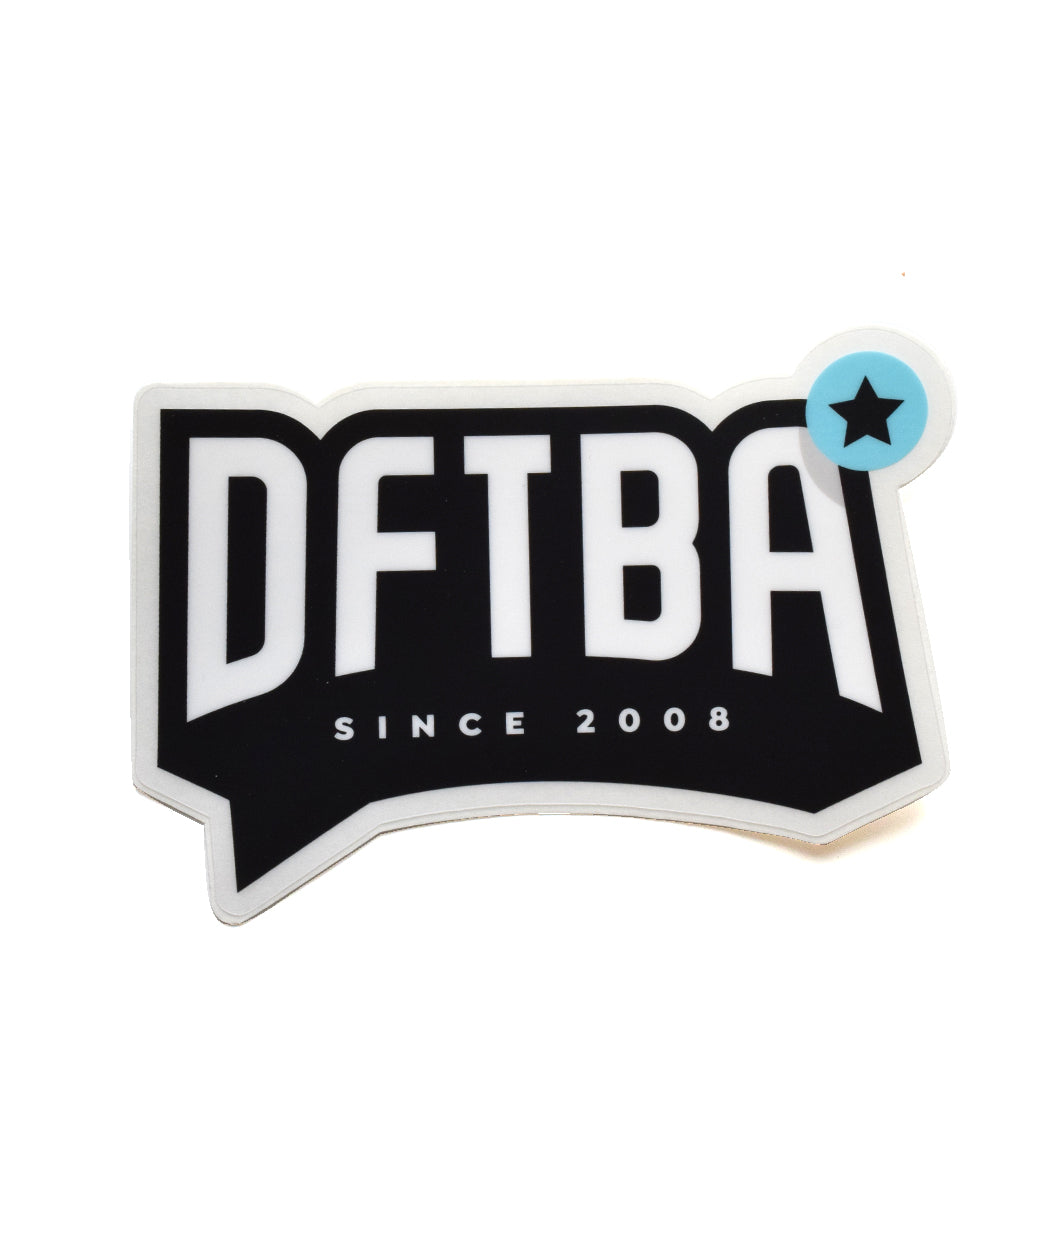 DFTBA Logo Decal